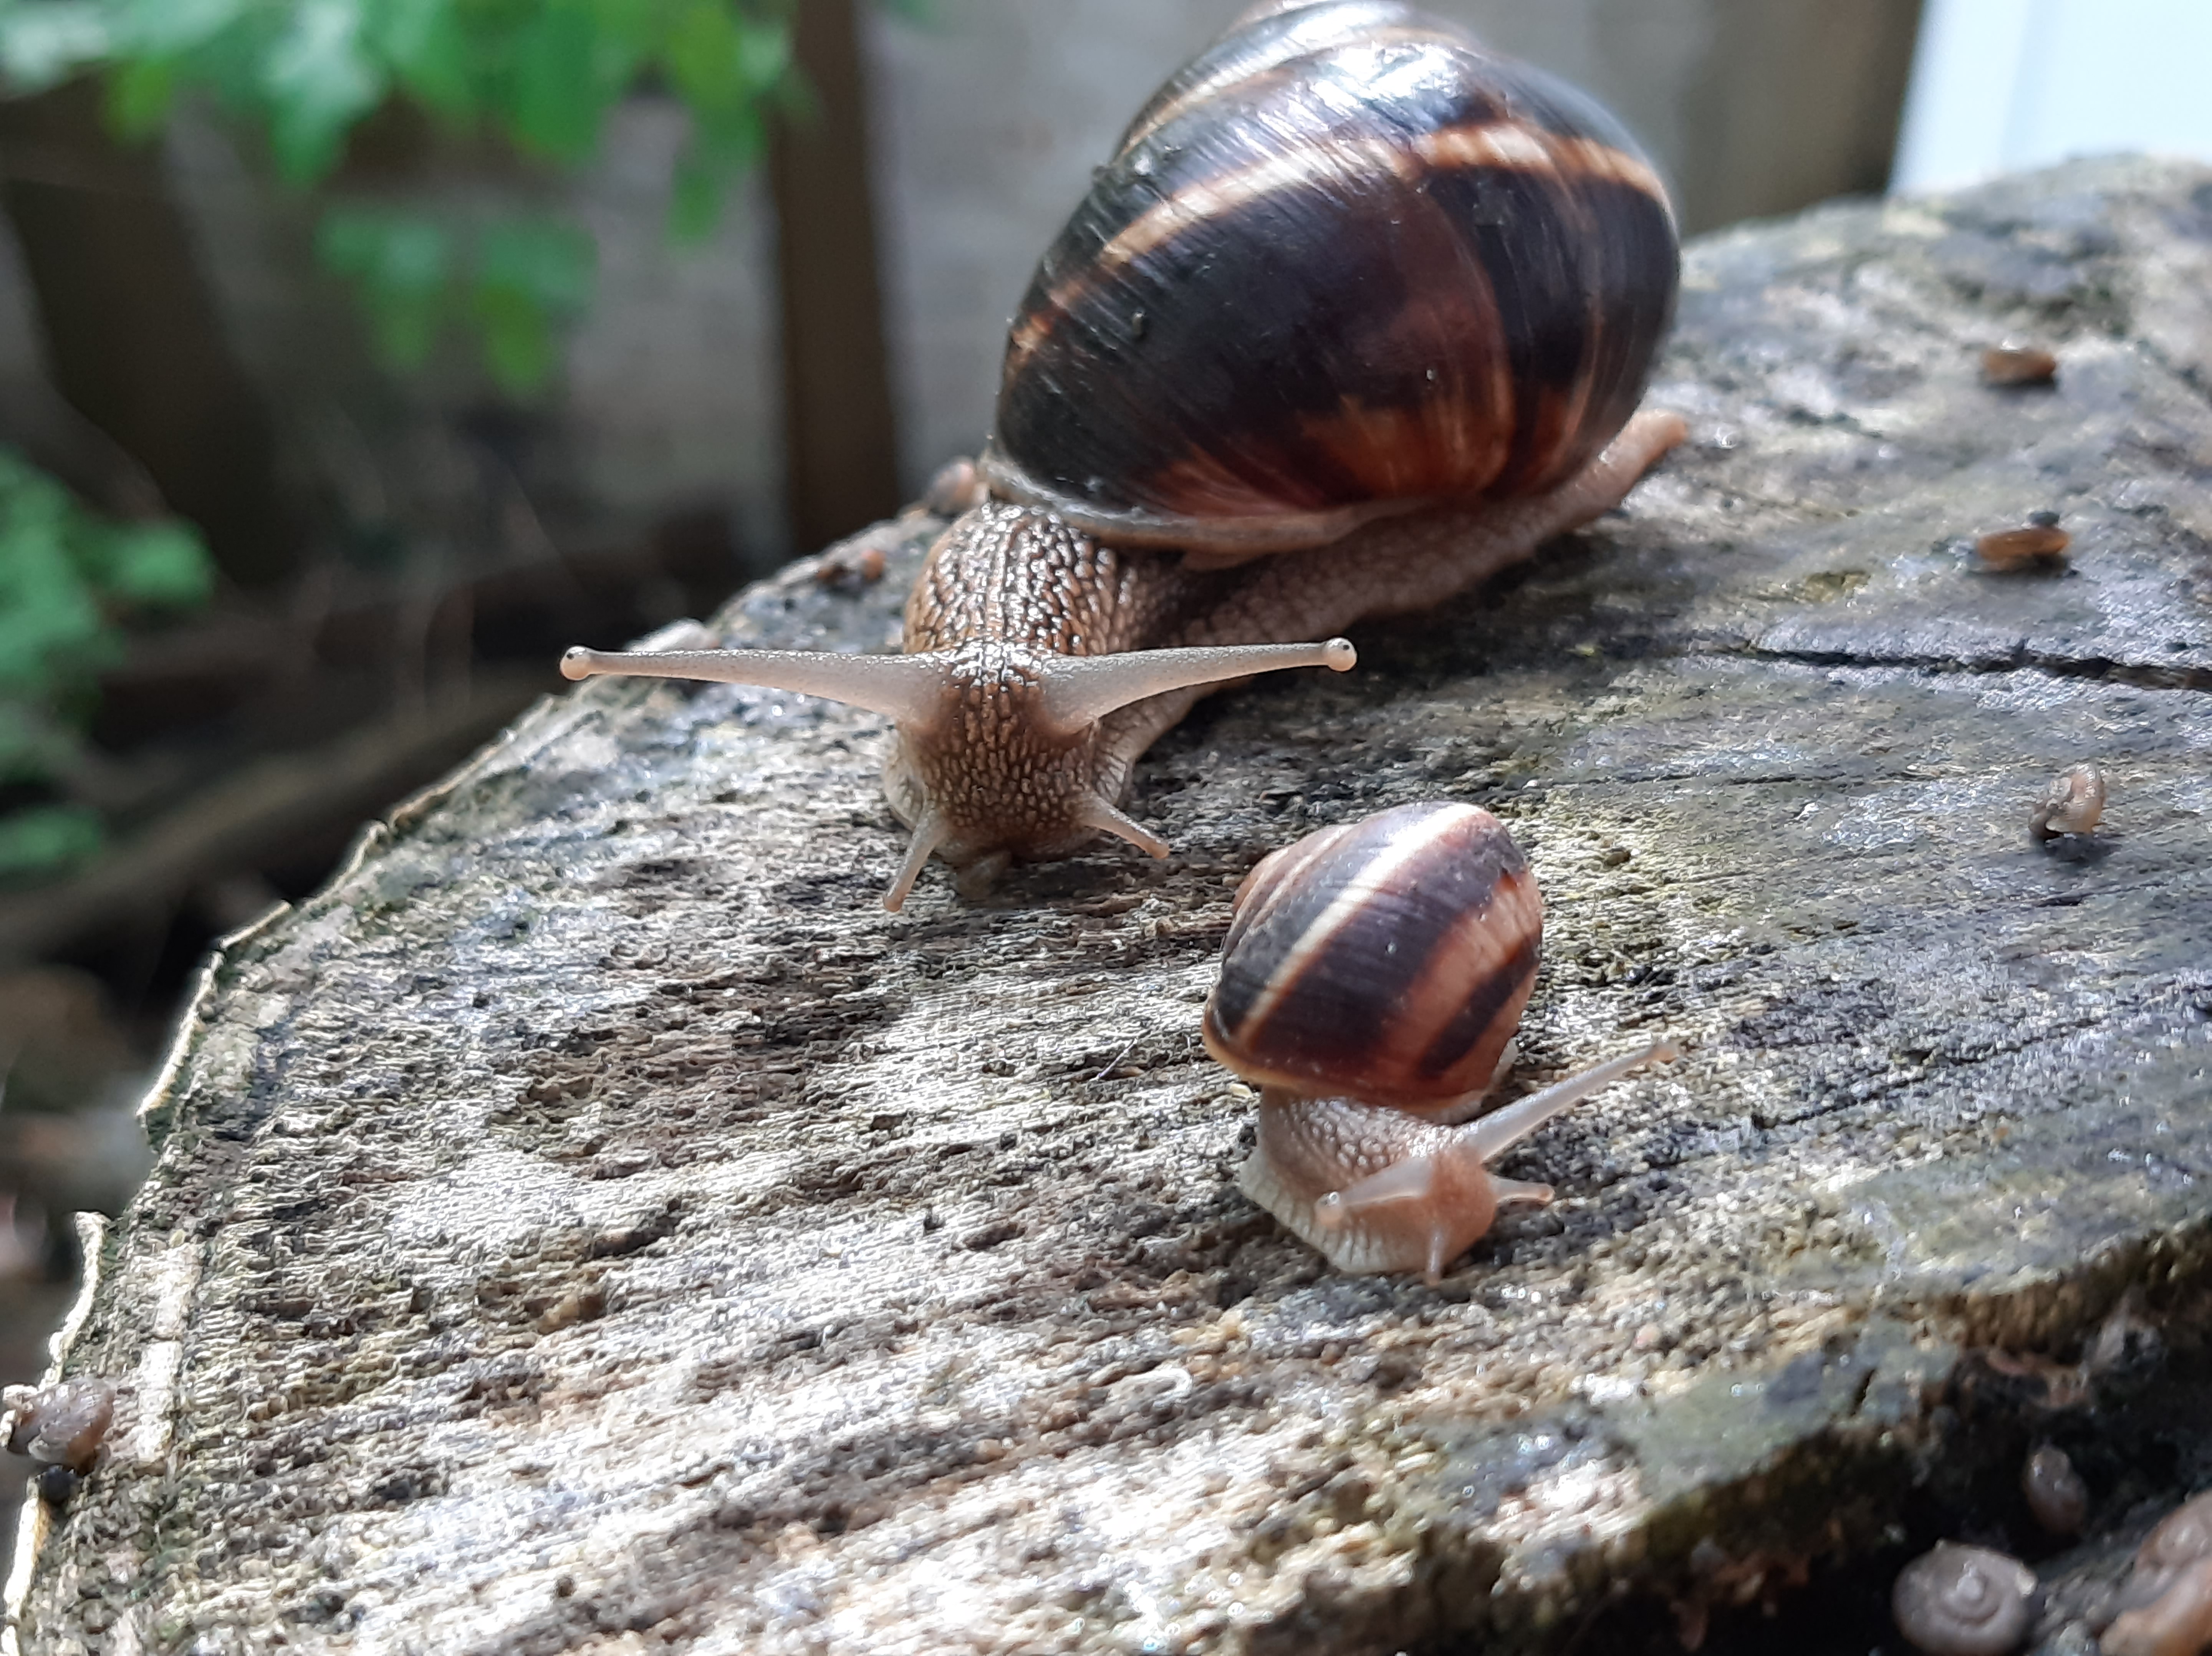 A snail crawling on a stump